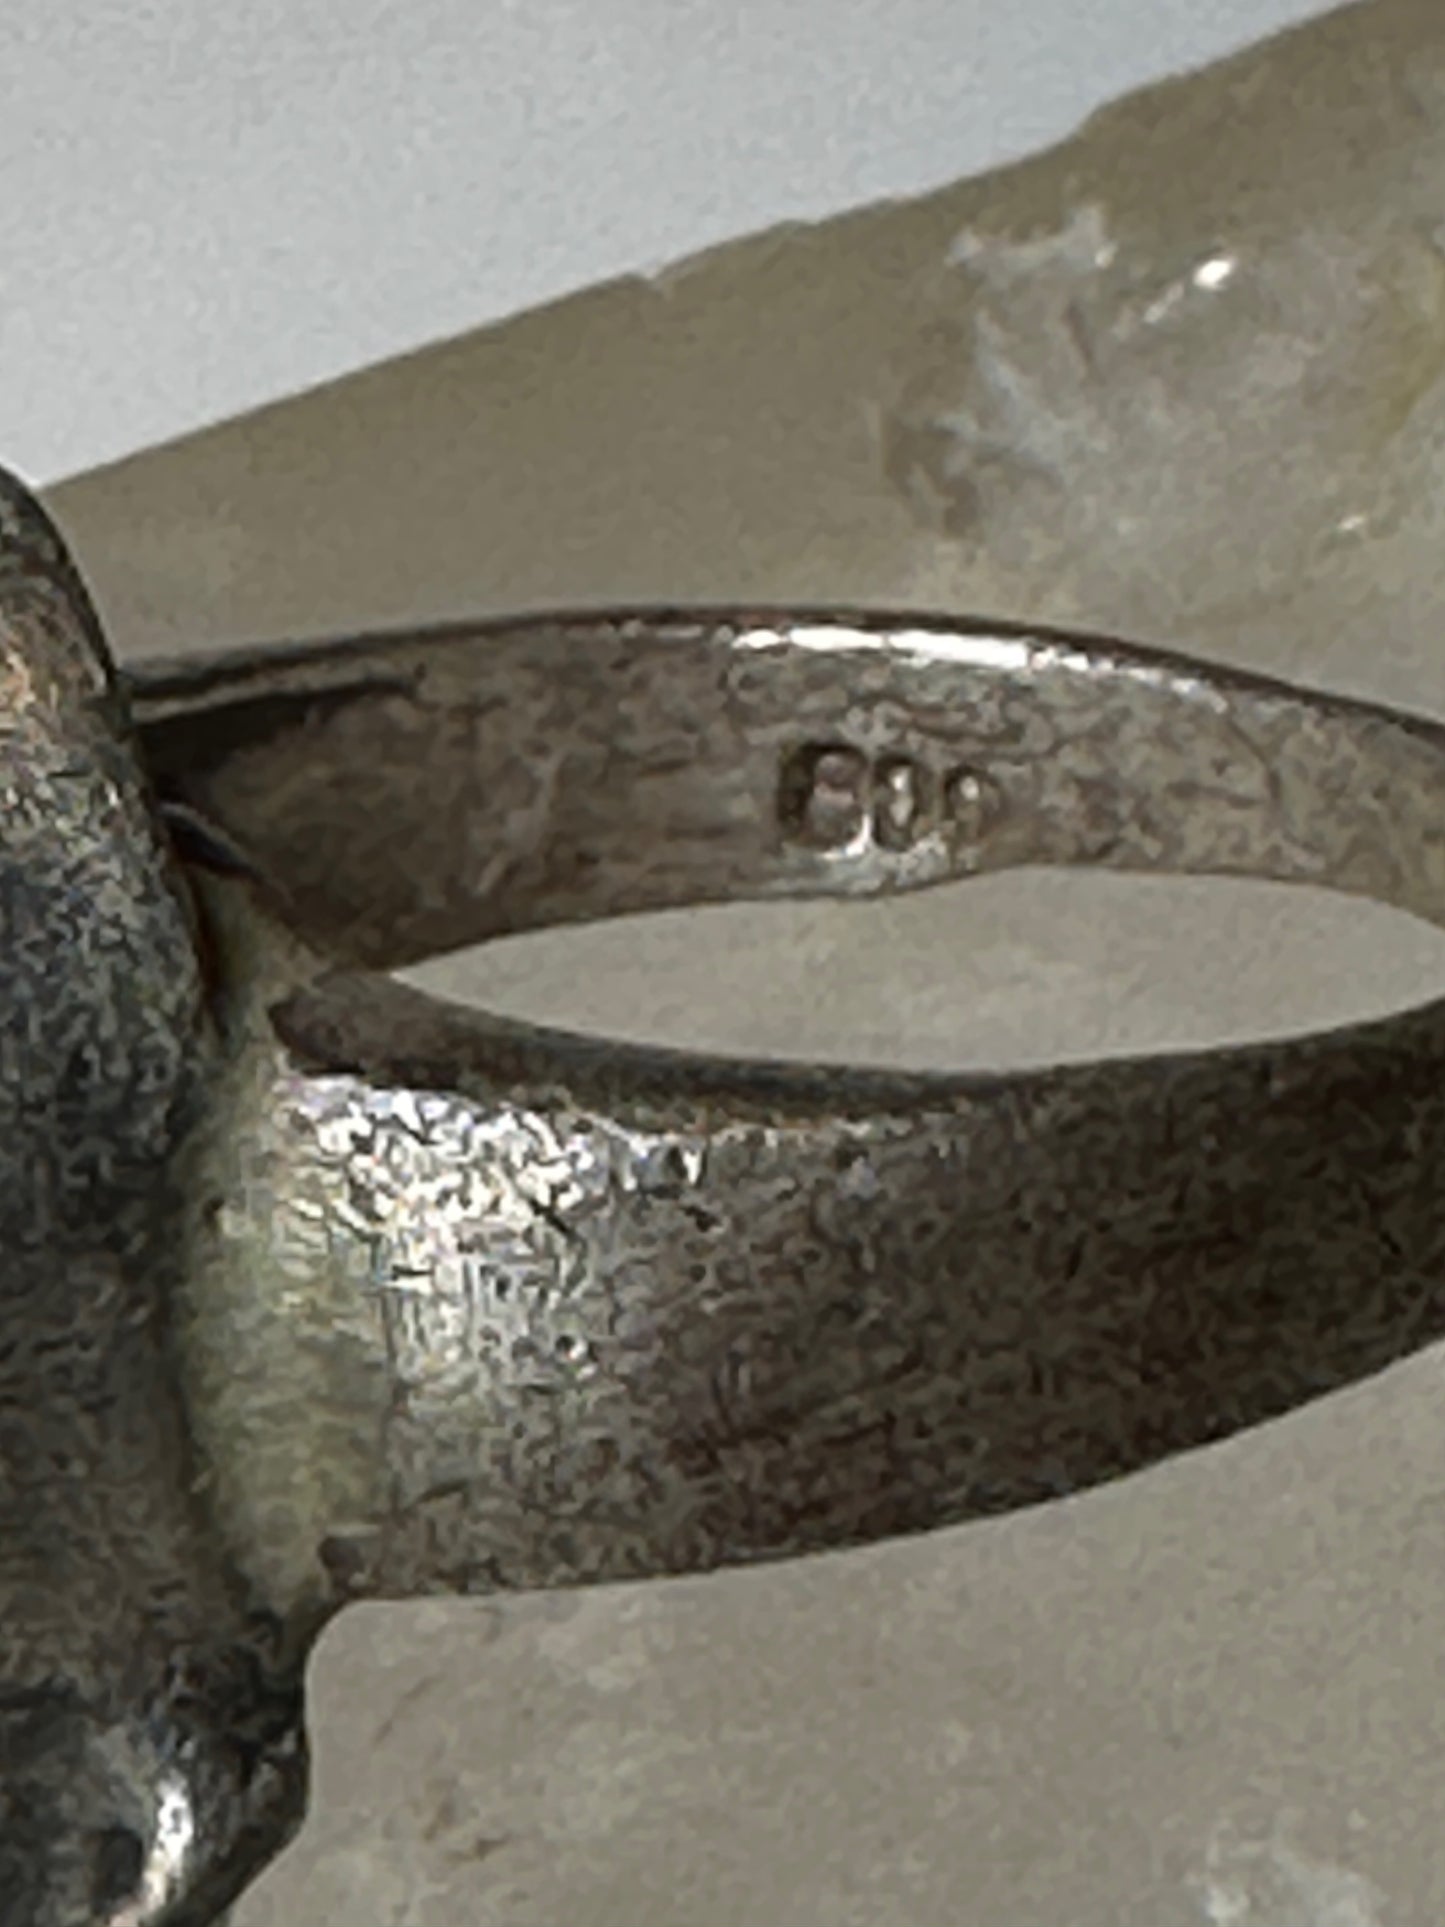 Skull ring size 7.75 biker band cast ring dark 800 silver from Ukraine